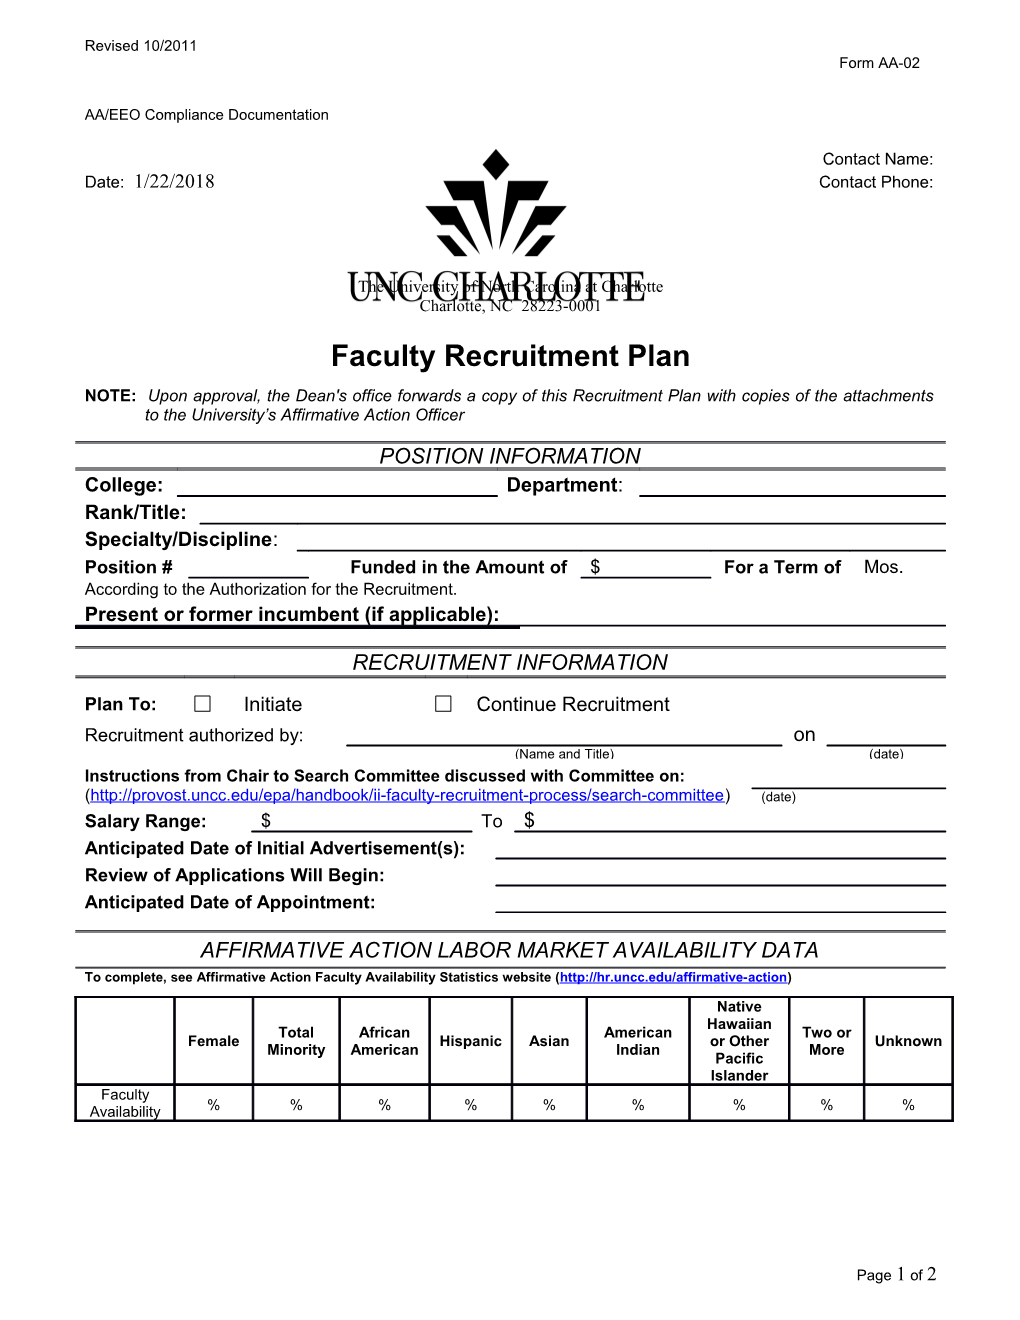 Faculty Recruitment Plan